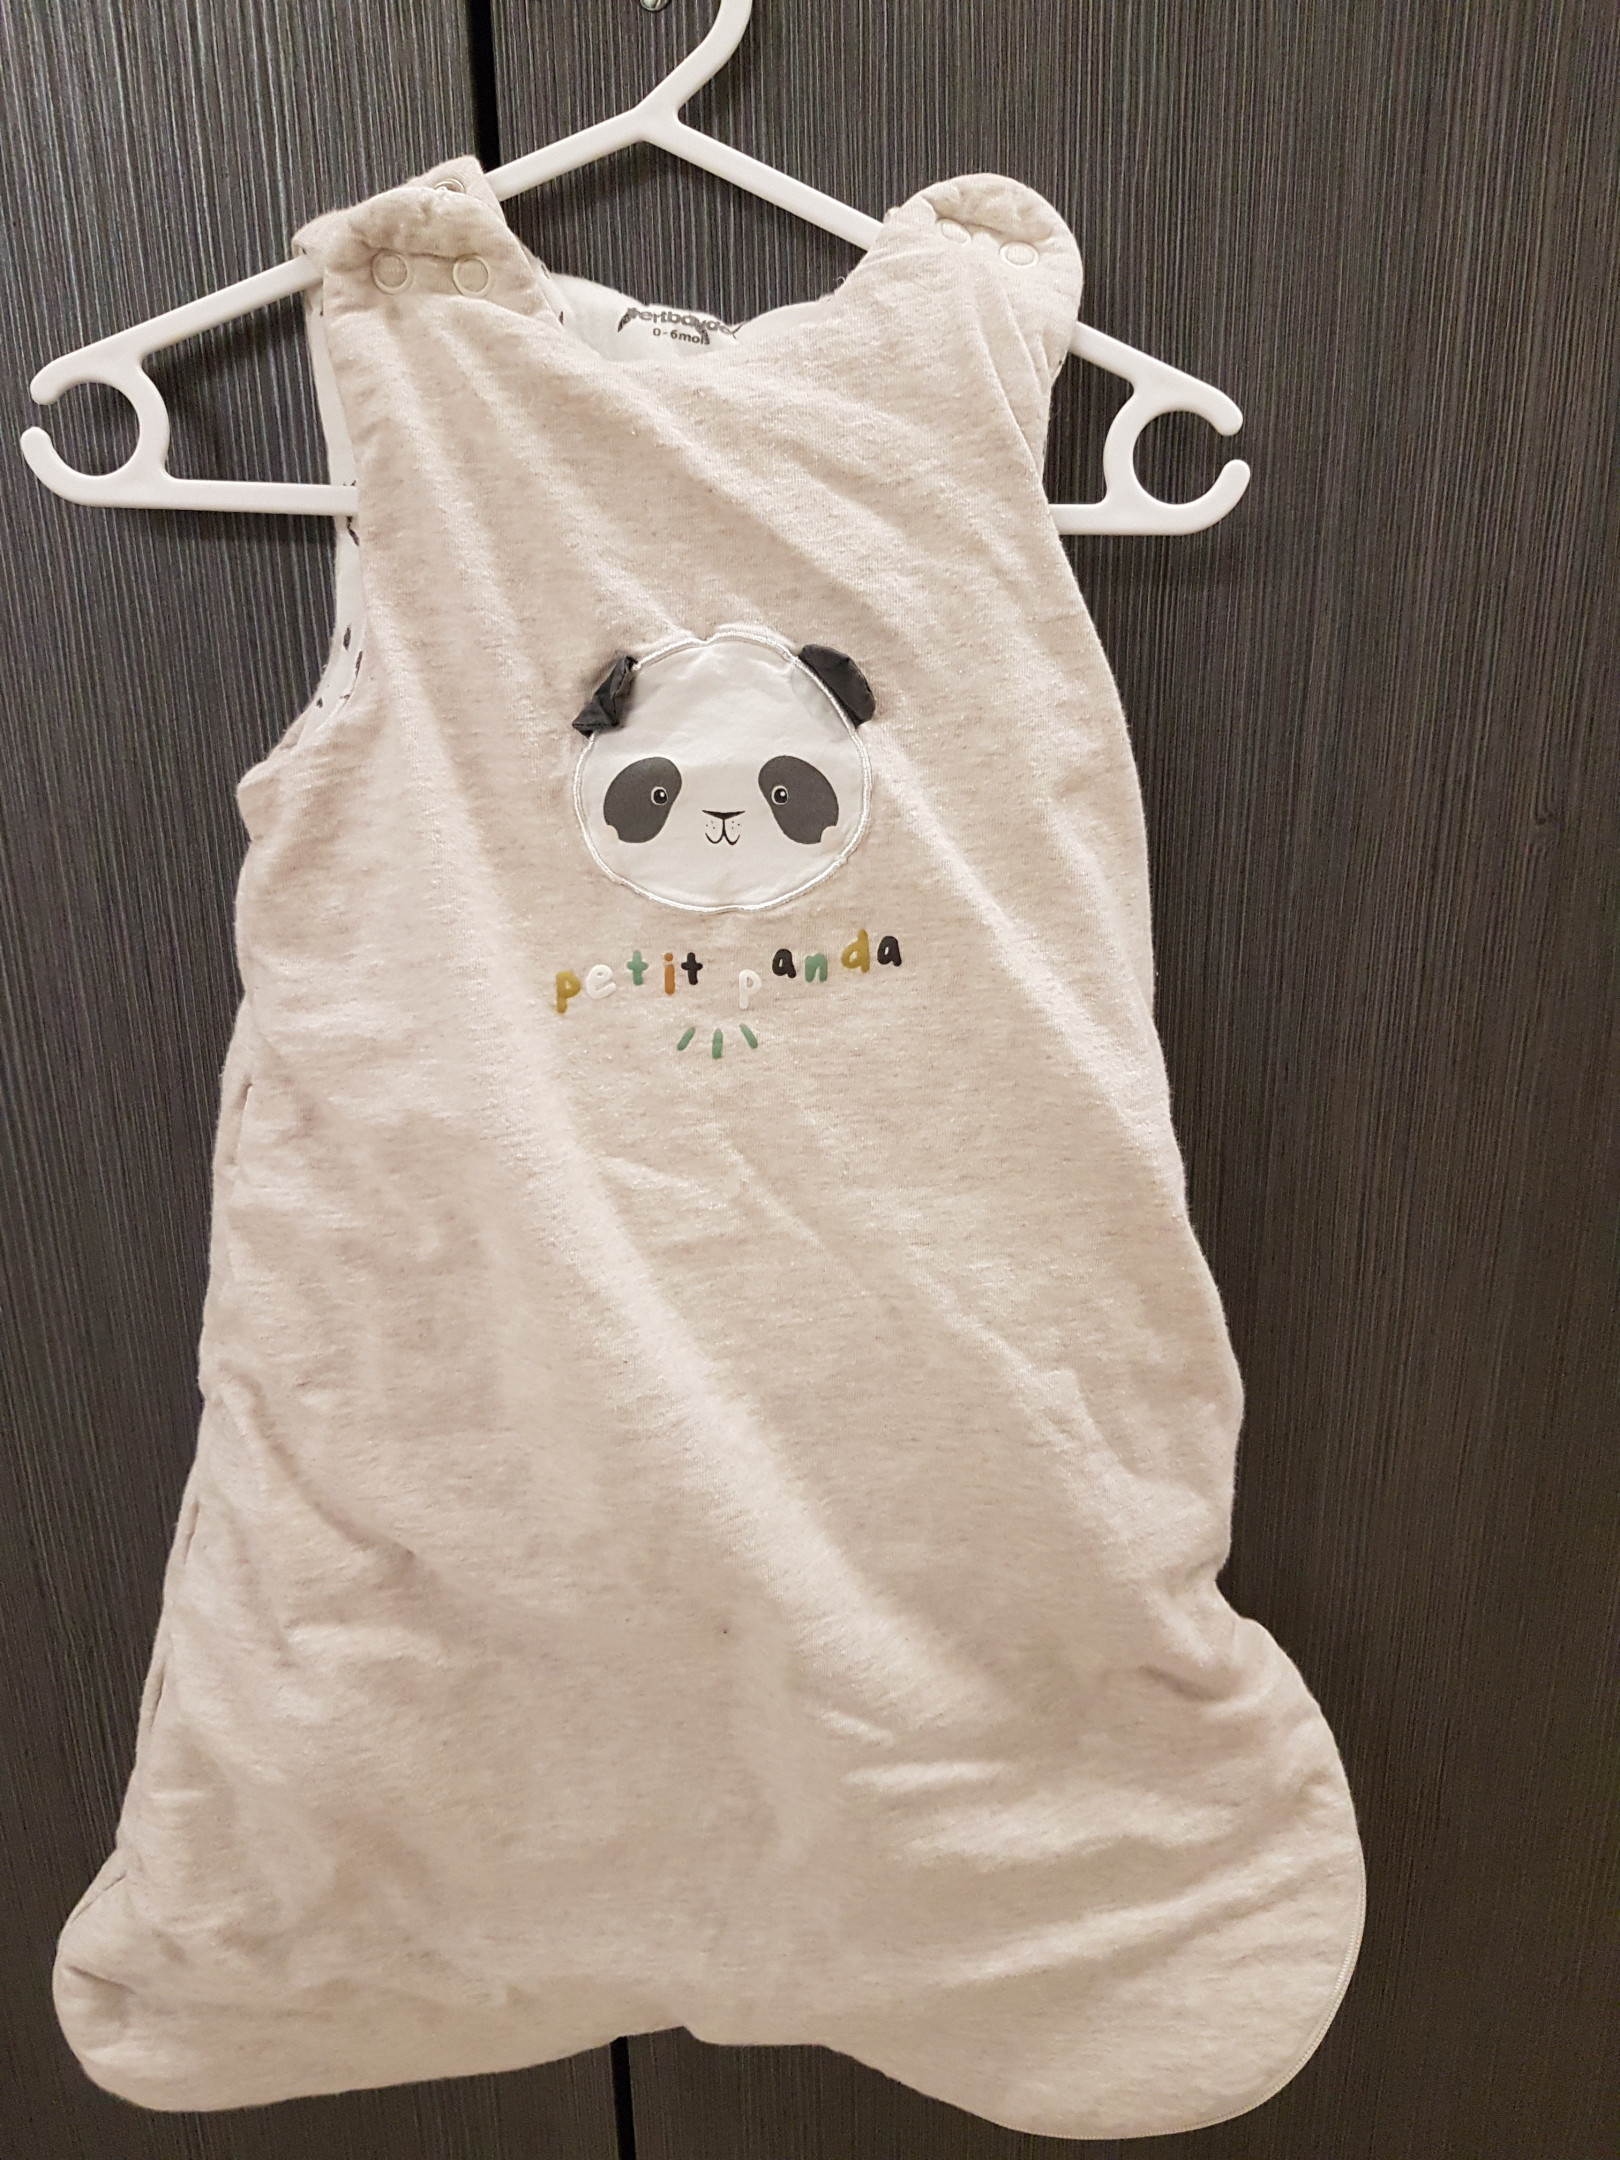 Sleeping bag "little panda" ideal for winter TOG 2